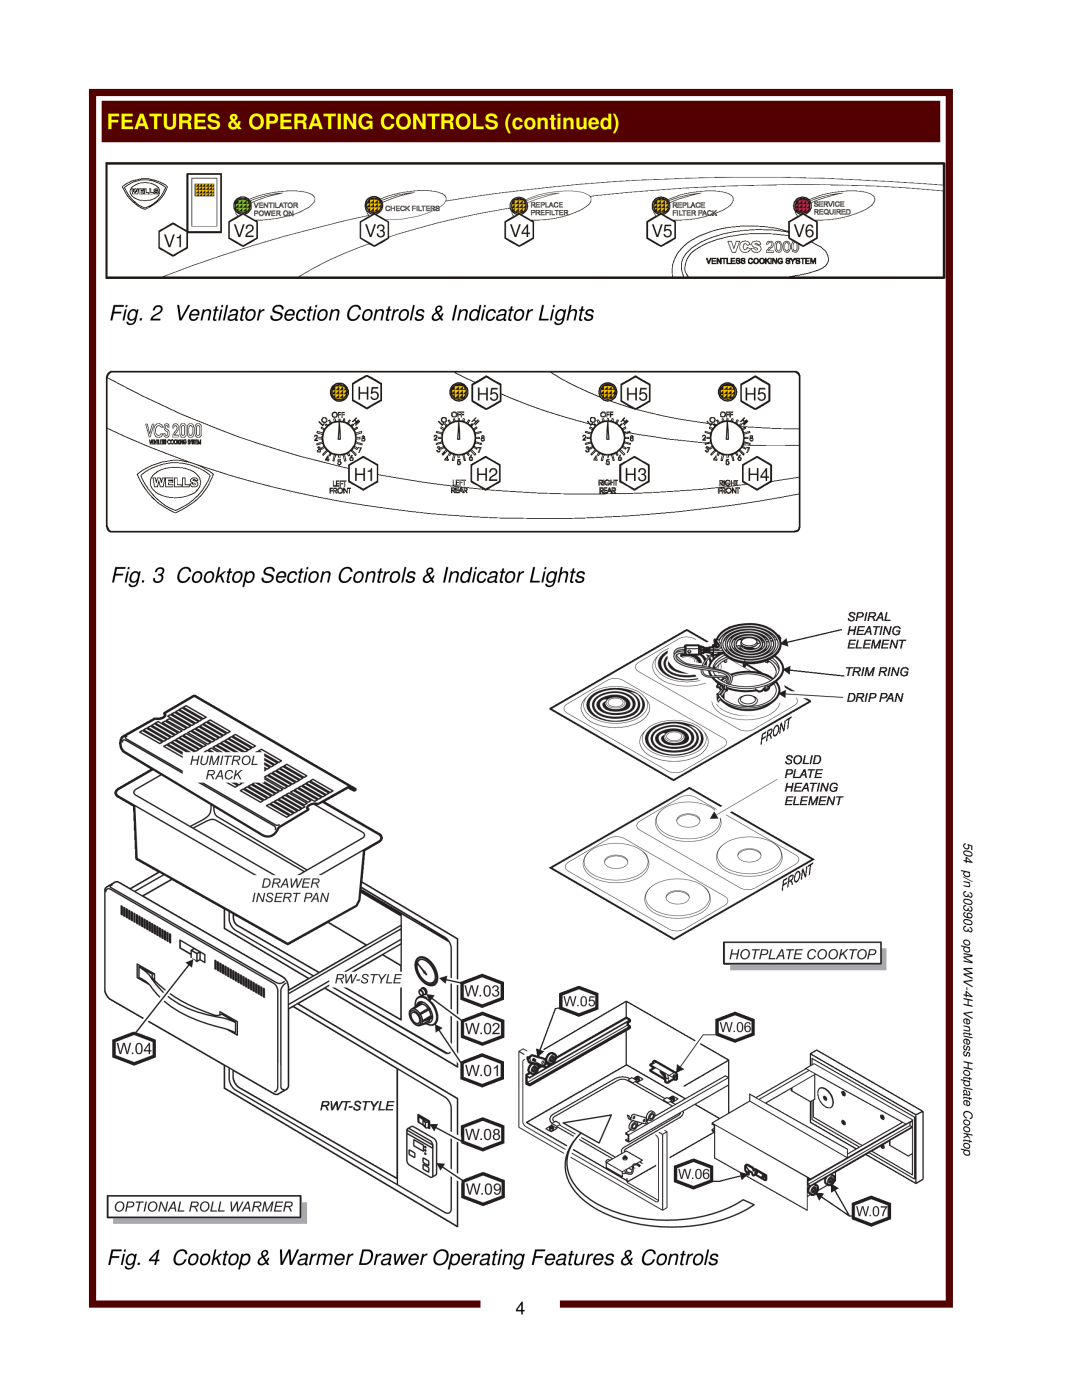 Wells WV-4HFRWT Ventilator Section Controls & Indicator Lights, Cooktop Section Controls & Indicator Lights, W.03, W.04 